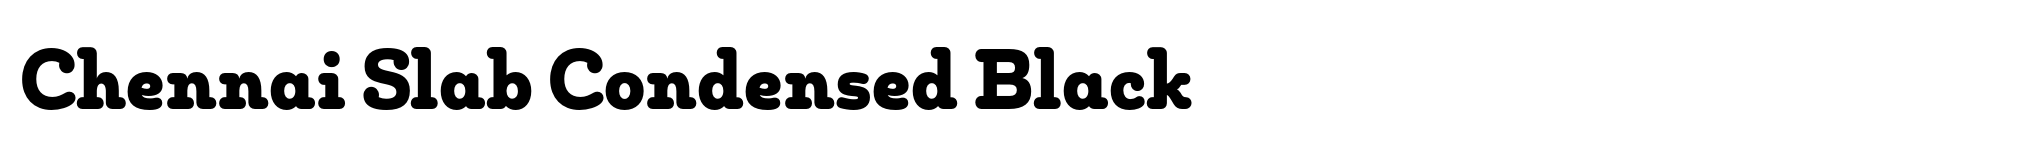 Chennai Slab Condensed Black image